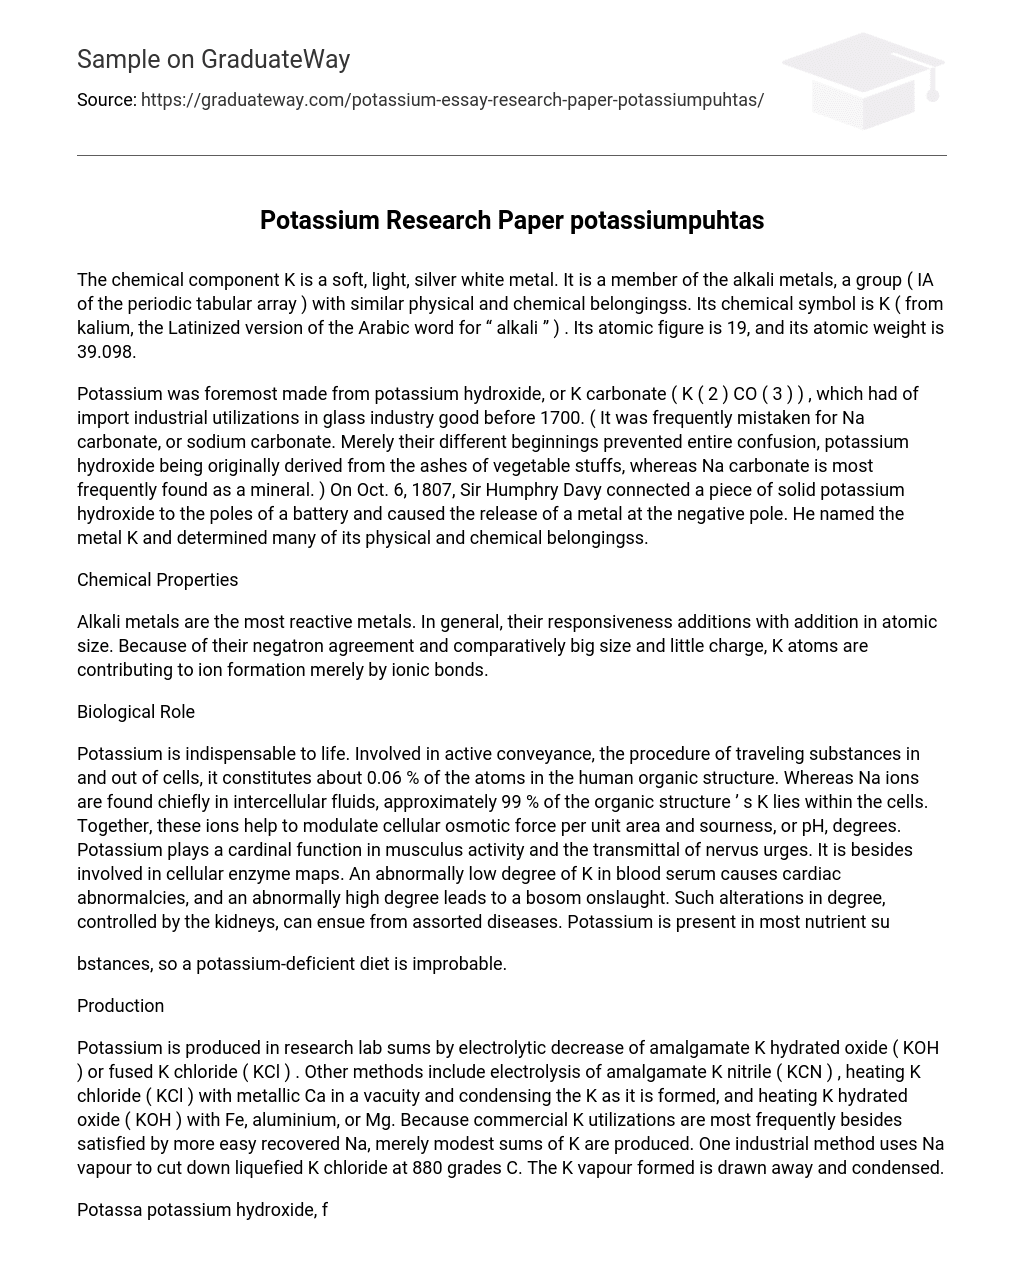 Potassium Research Paper potassiumpuhtas